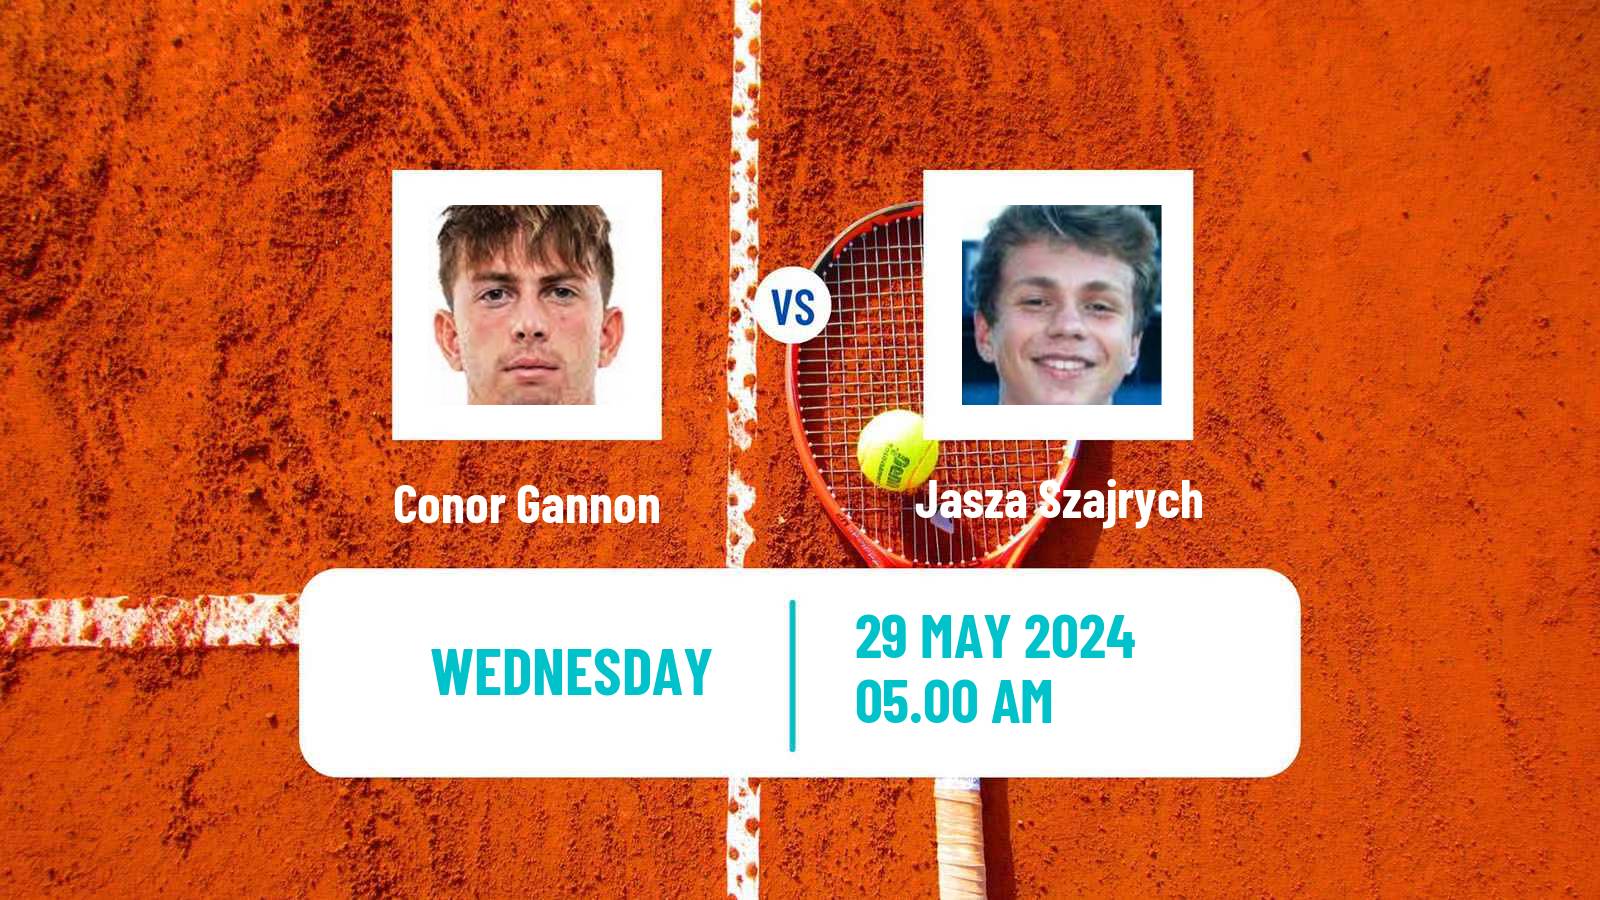 Tennis ITF M15 Bol 2 Men Conor Gannon - Jasza Szajrych